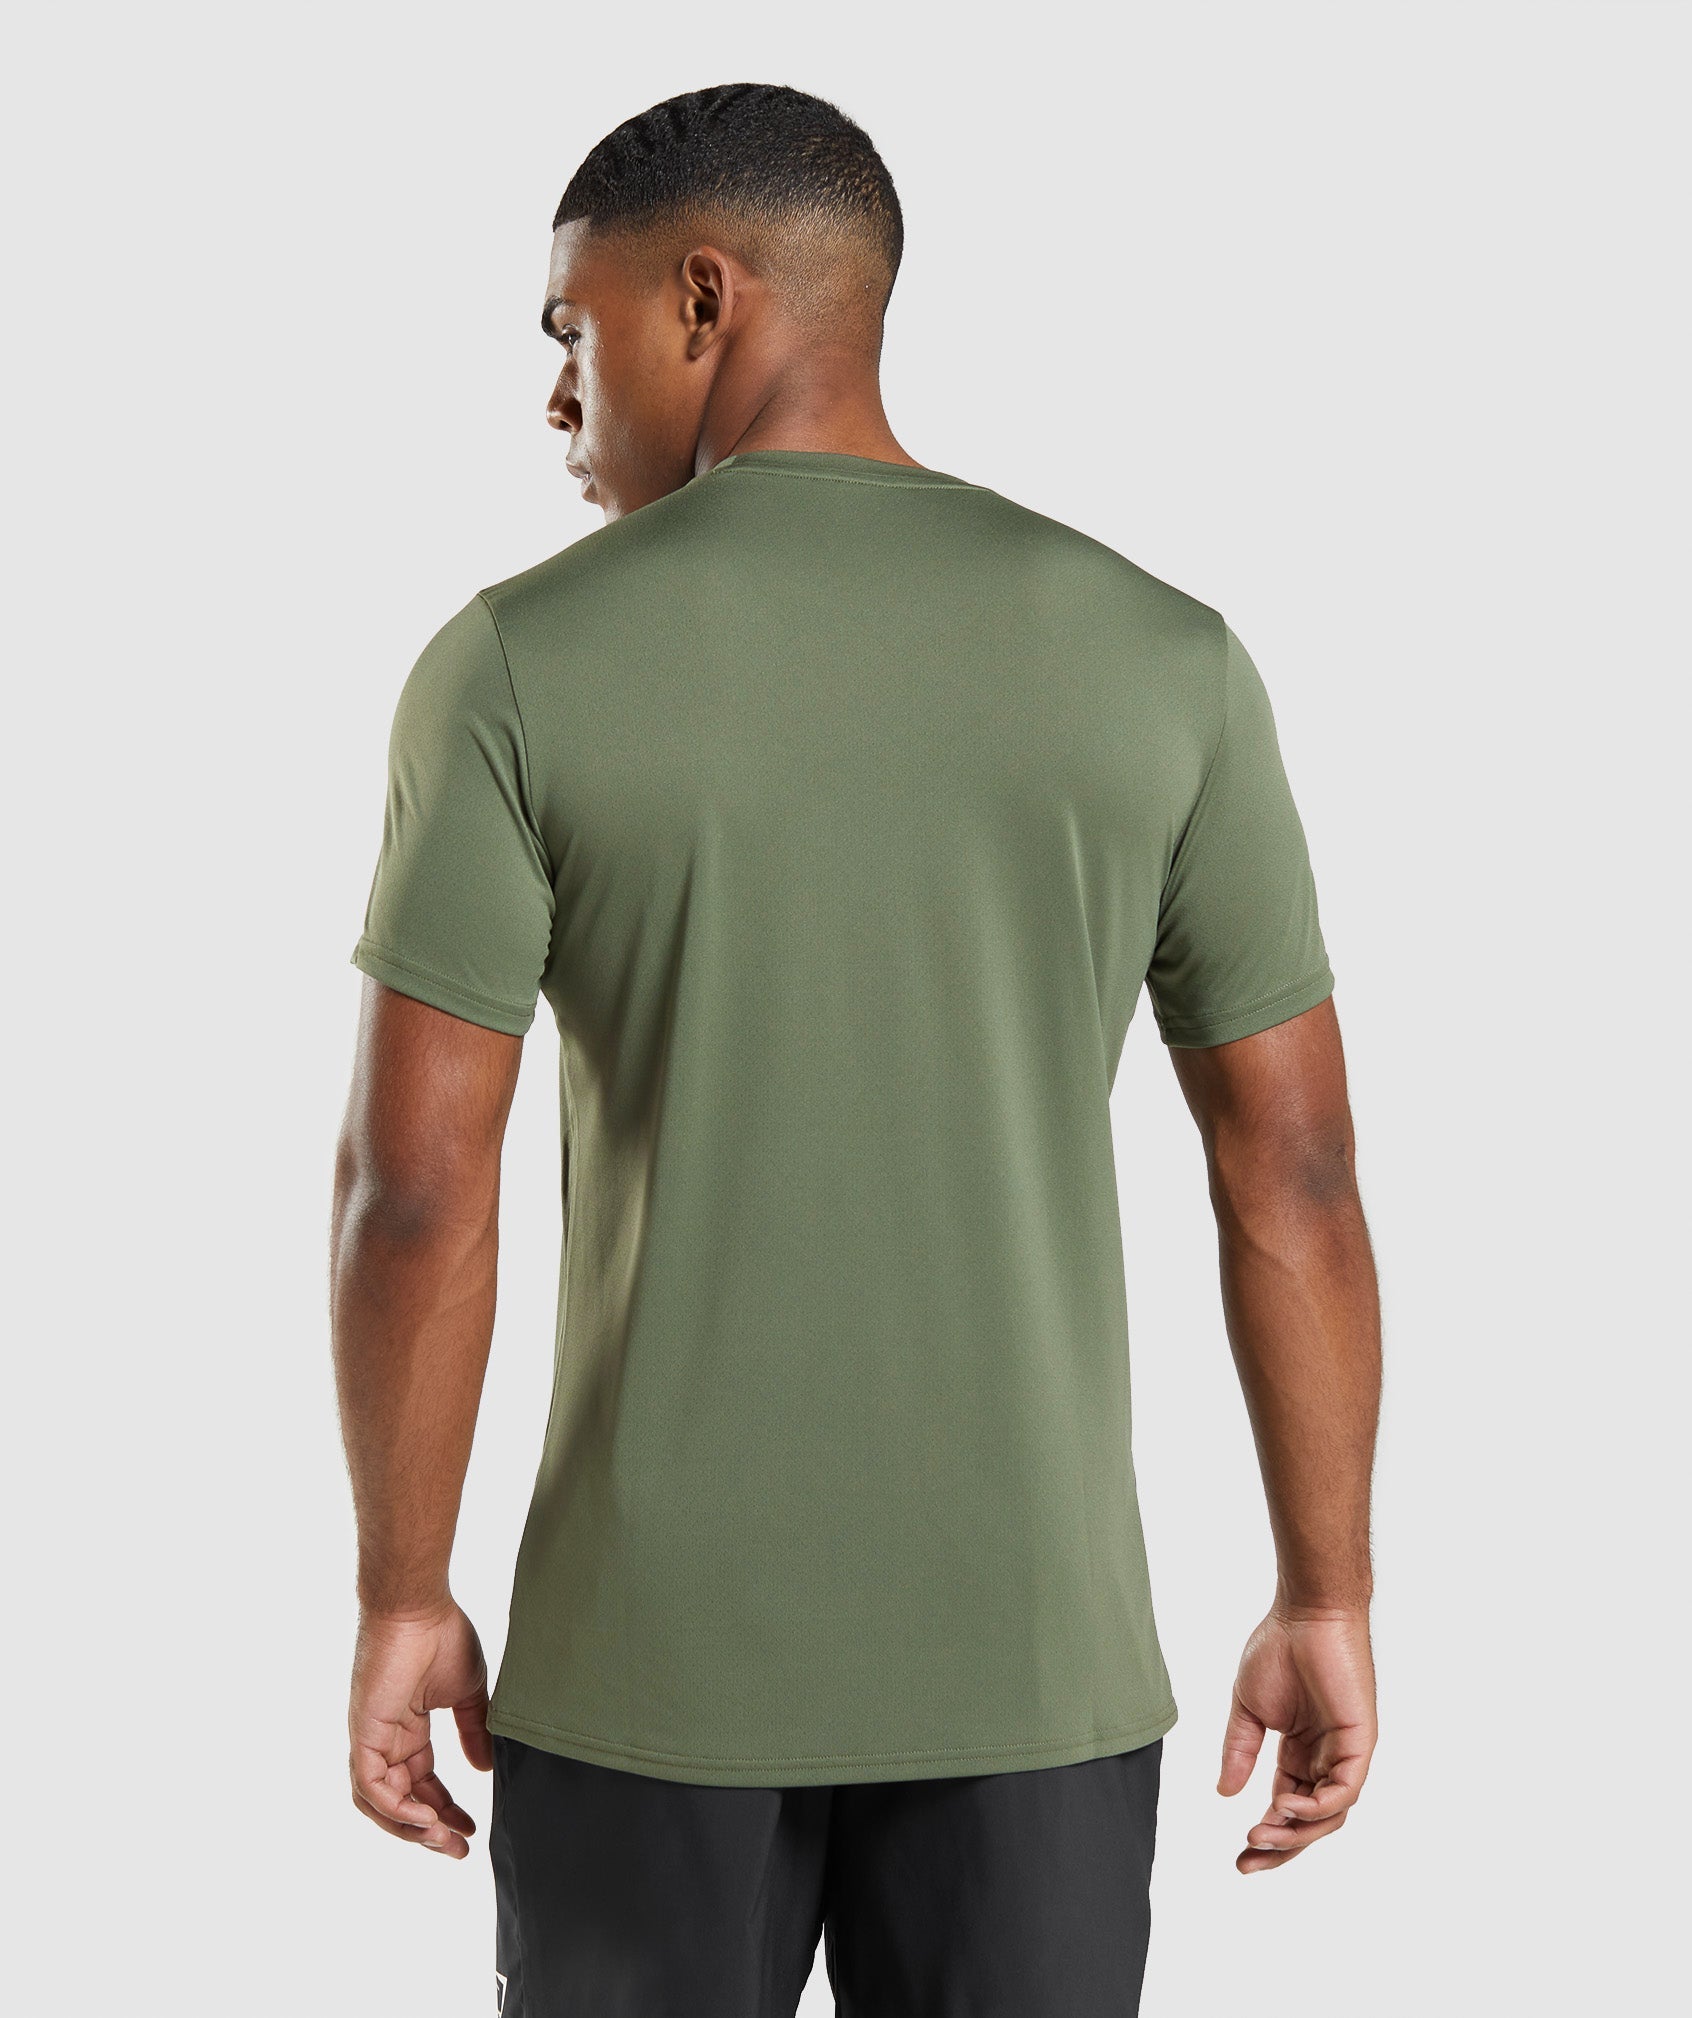 Gymshark Apollo T-Shirt - Core Olive – Gym9irsh